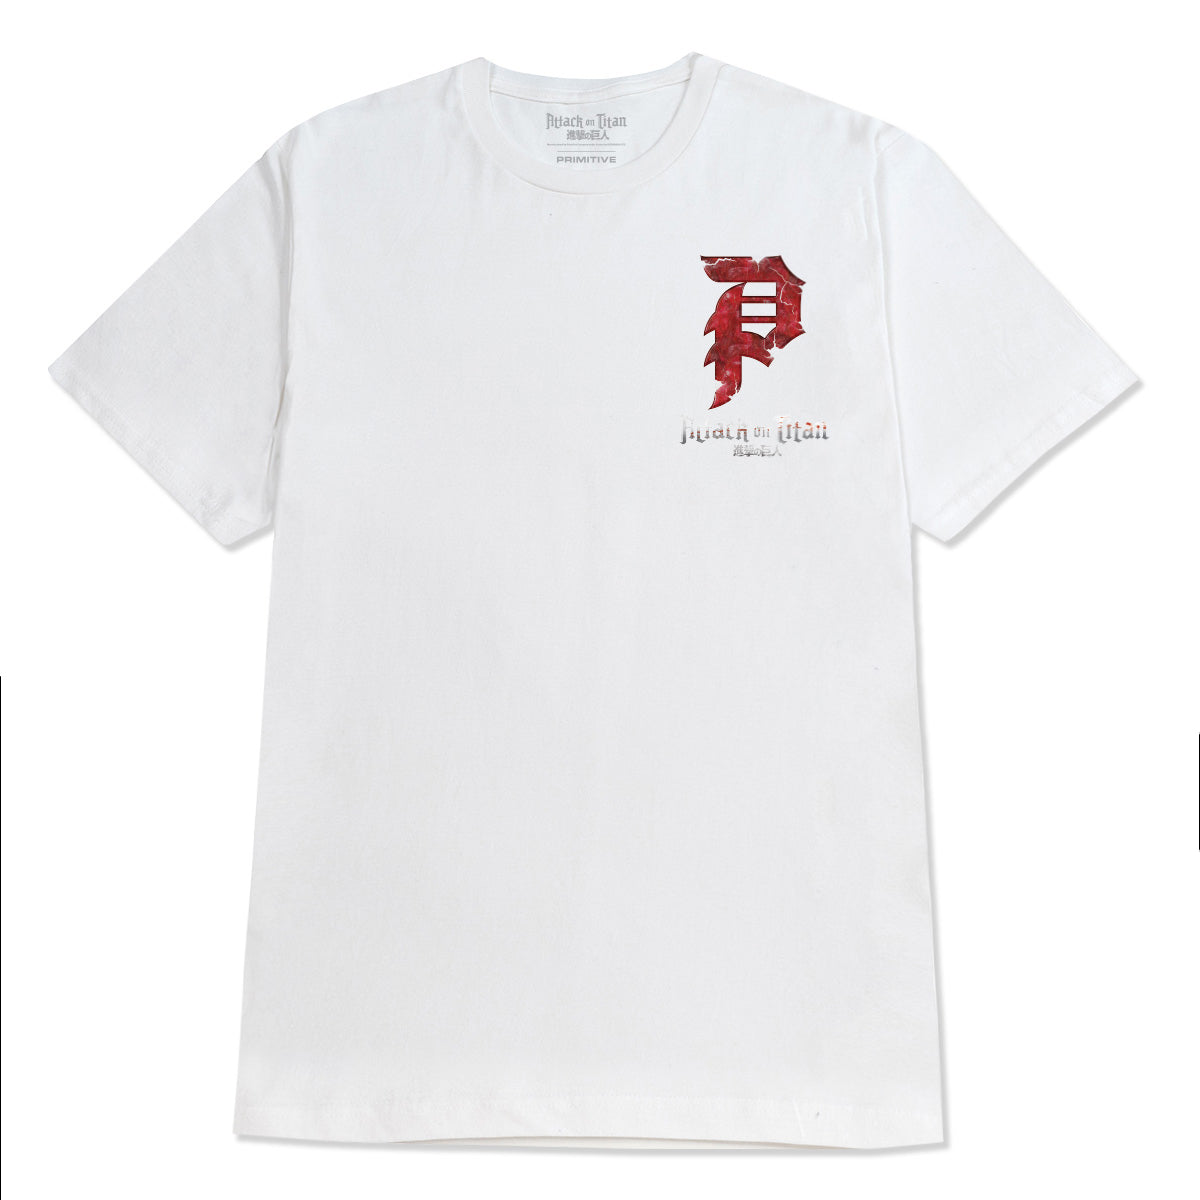 Primitive x Titans Armored Dirty P T-Shirt - White image 2